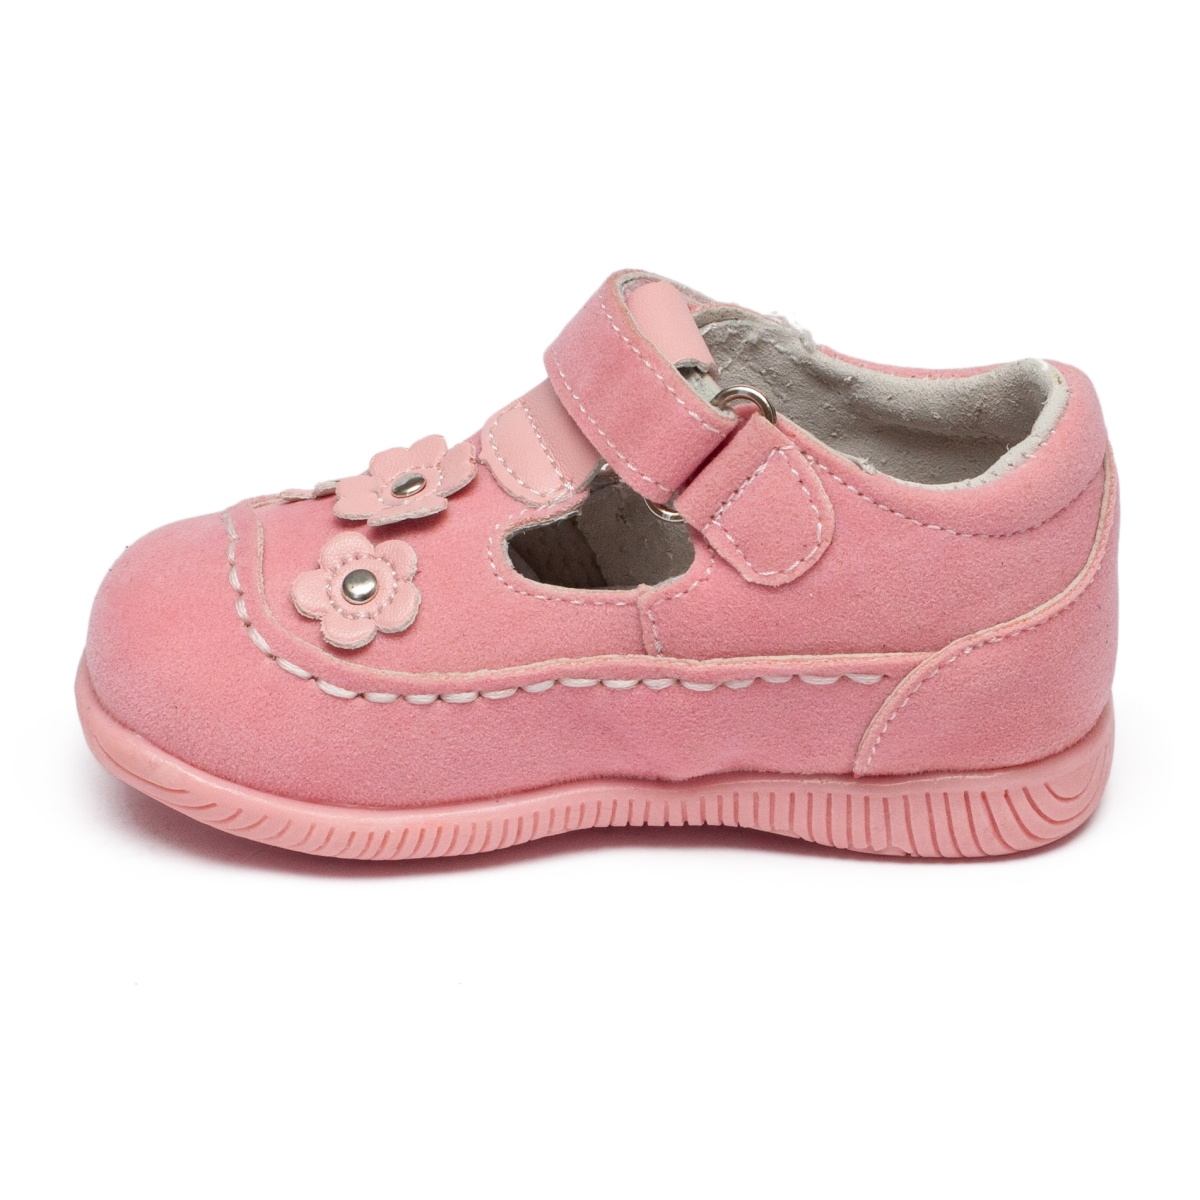 powder Constitution Privilege Pantofi fete flexibili 1600 roz 19-24. Incaltaminte din piele pentru copii  si adulti - bambinii.ro